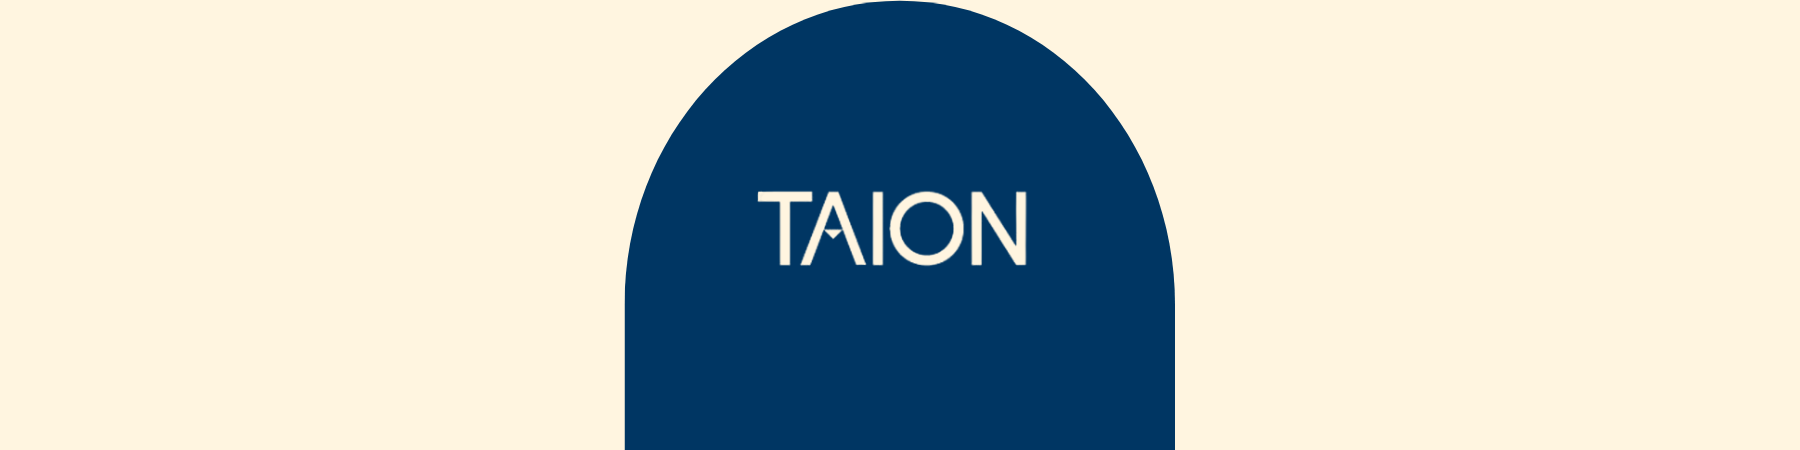 Taion - The Local Merchants